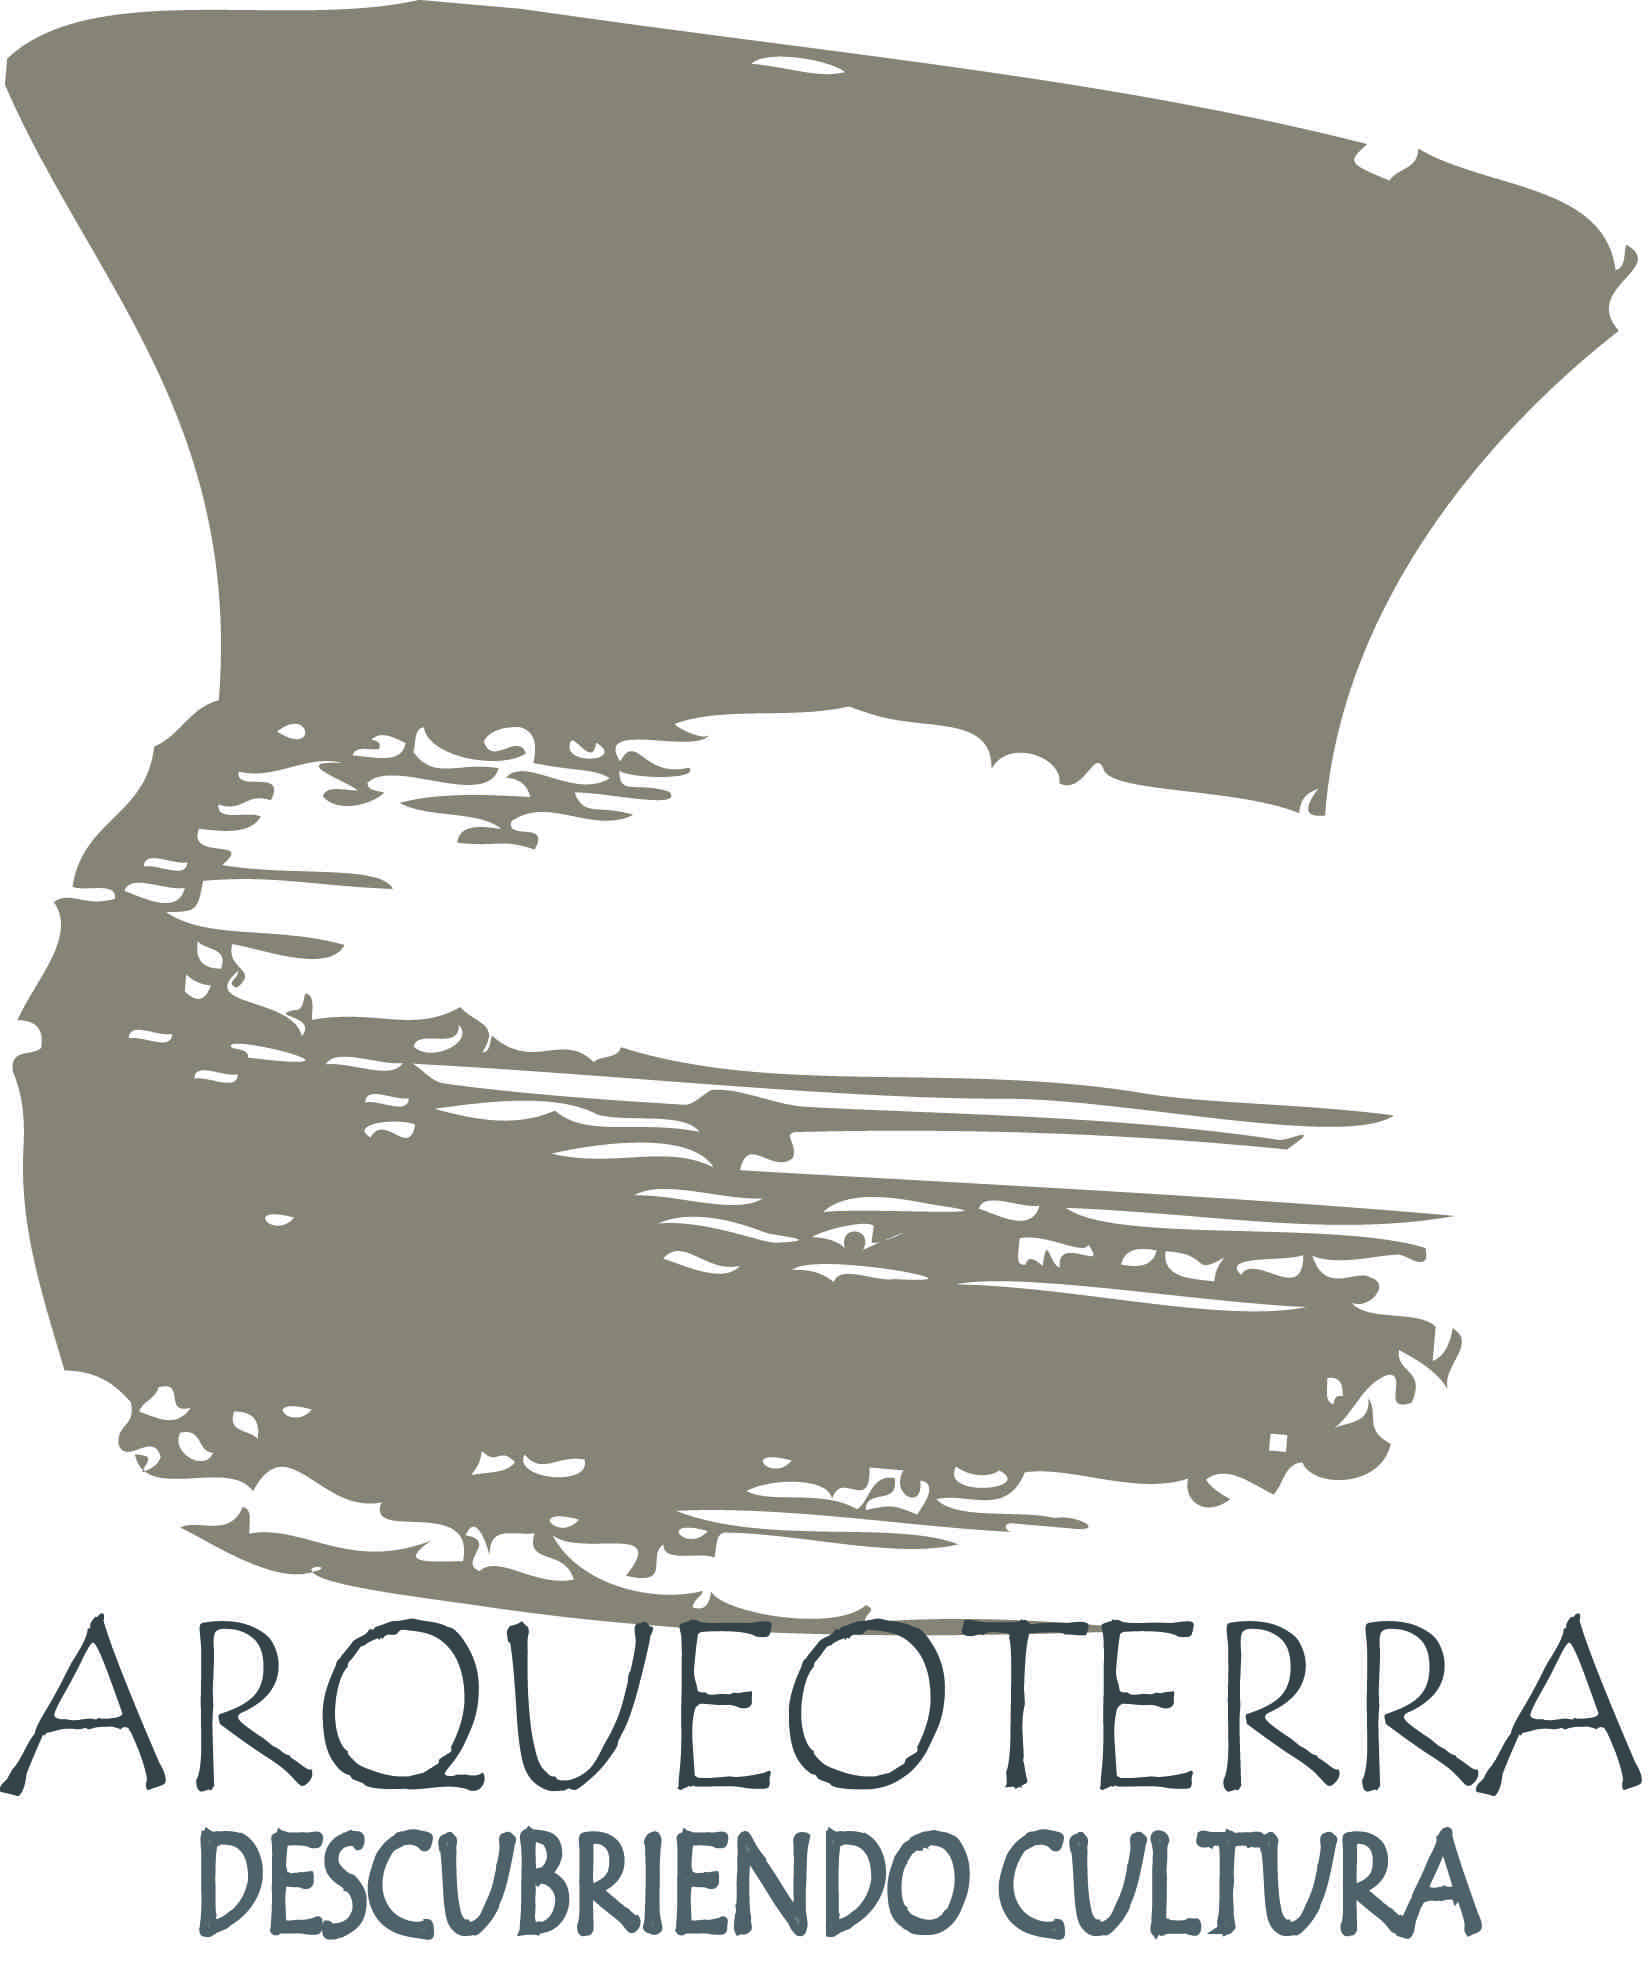 Arqueoterra